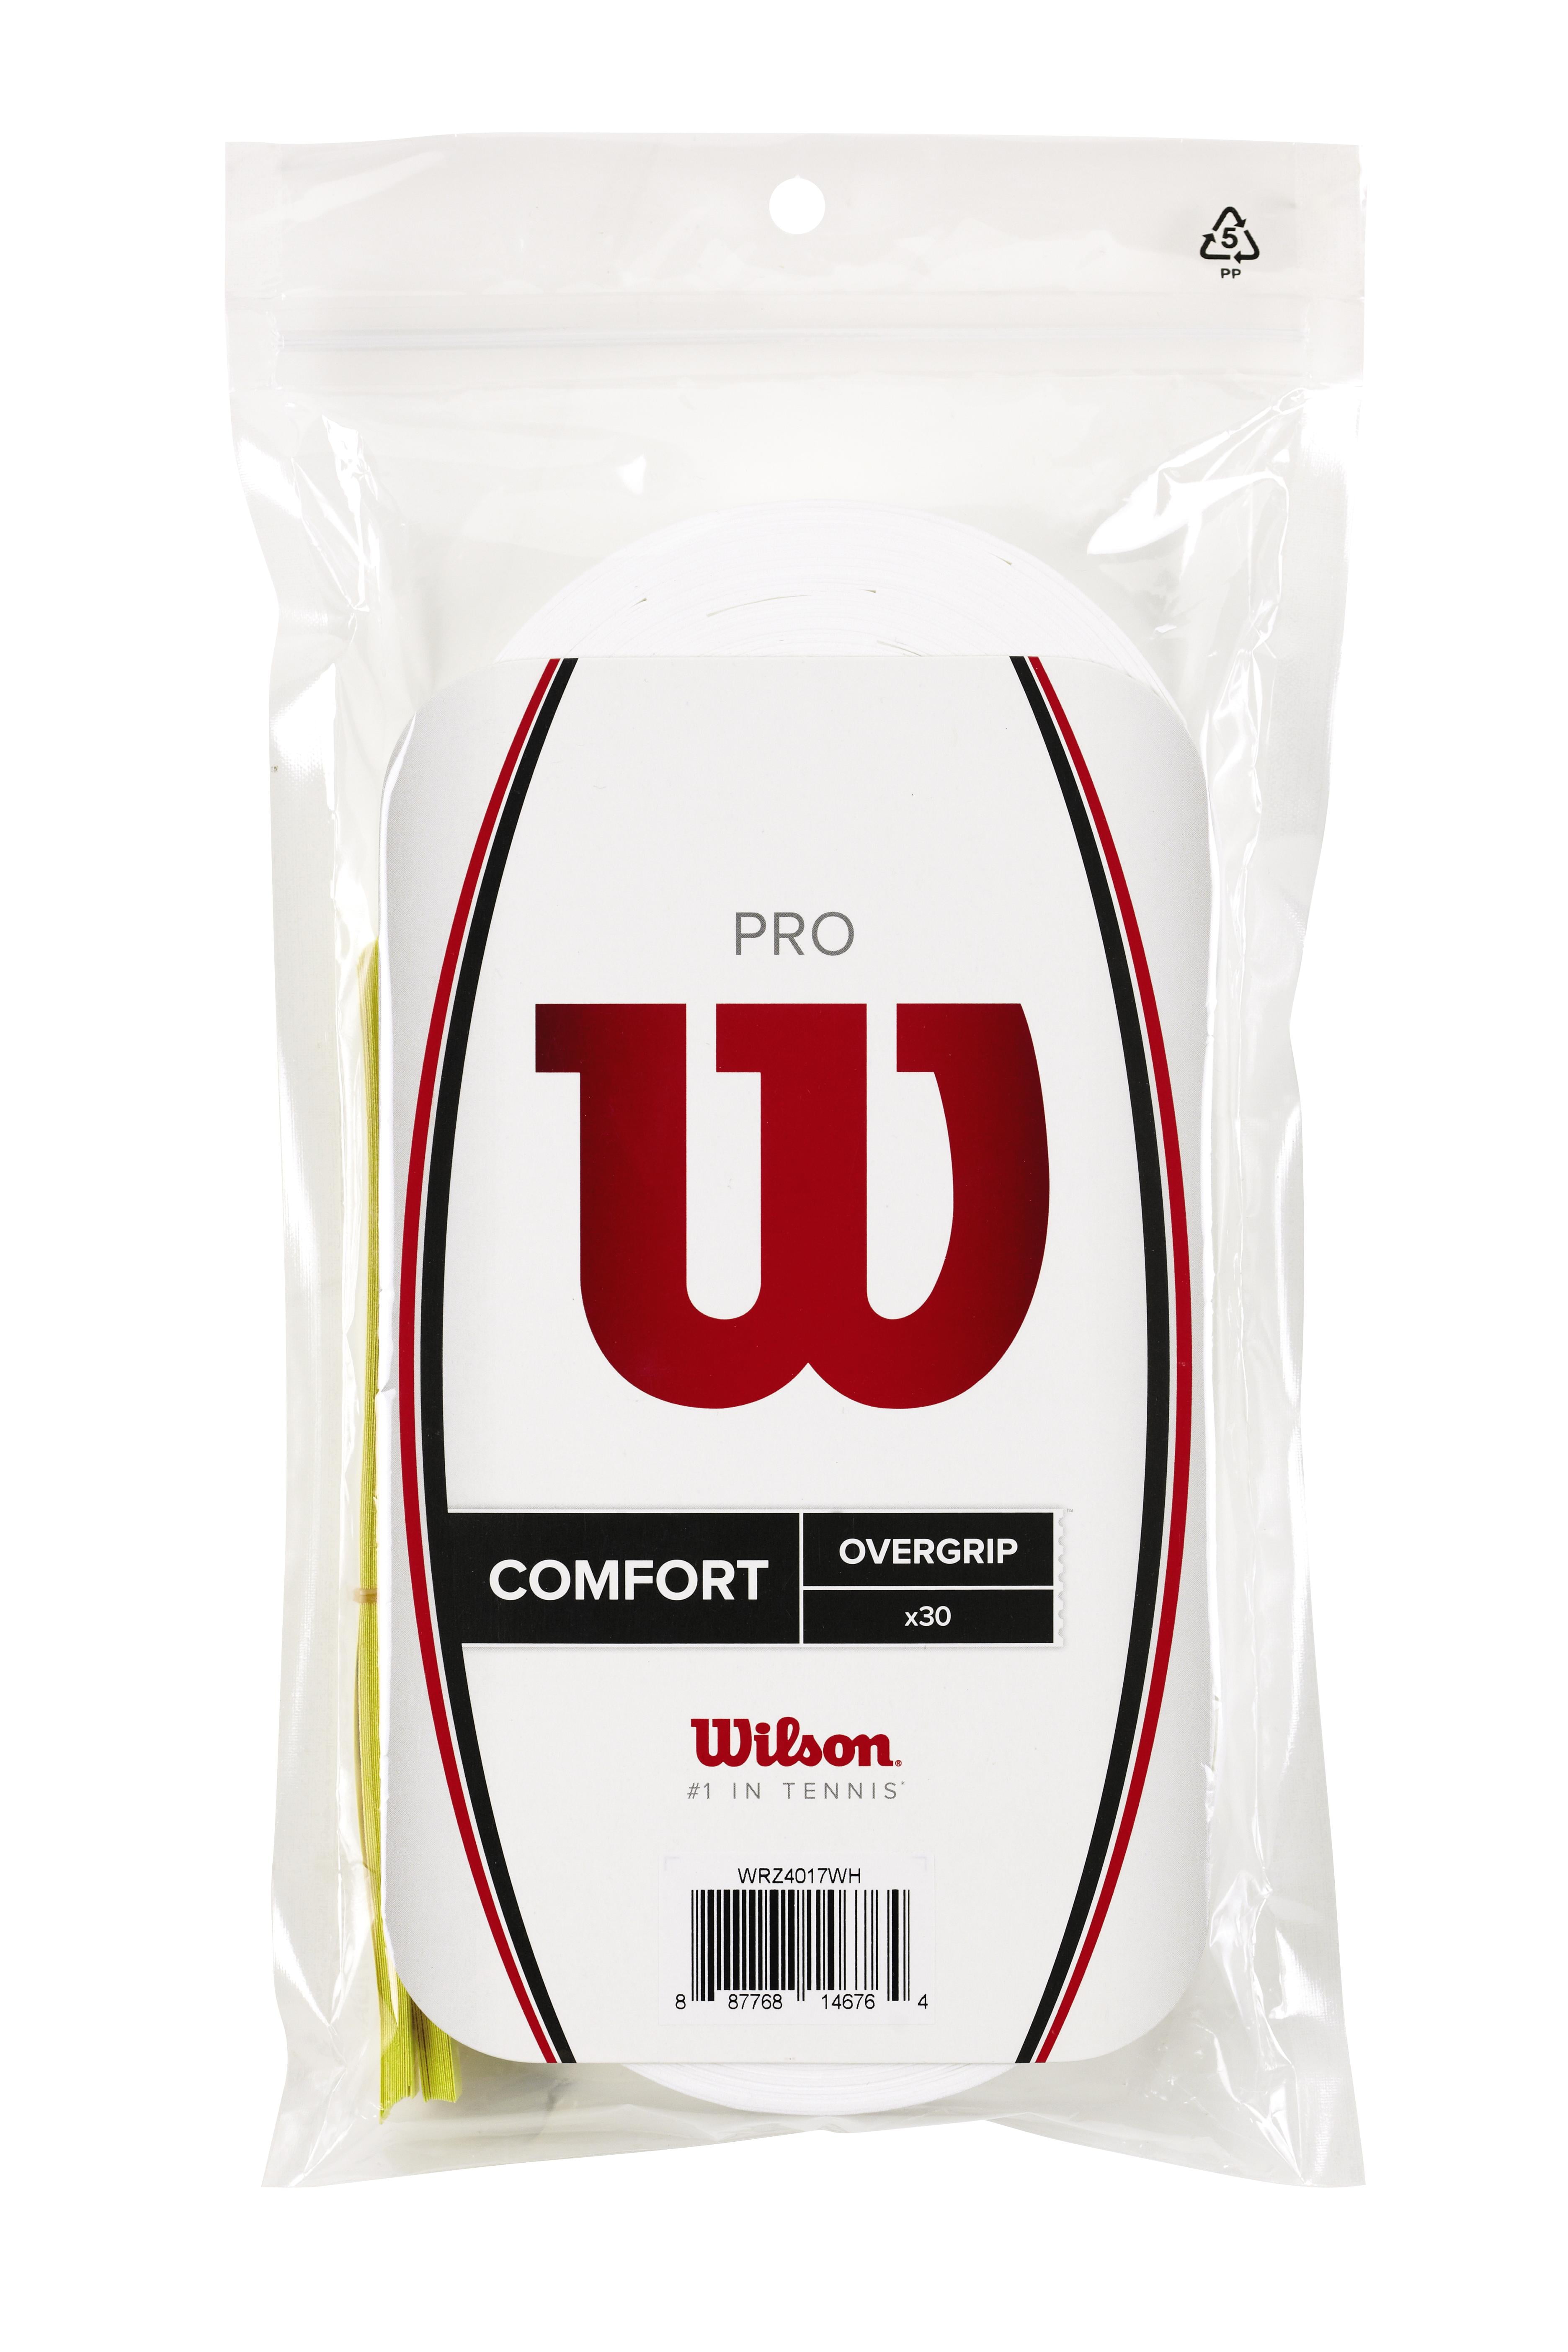 Wilson Pro Tennis Racket Overgrip, White - 30 Pack